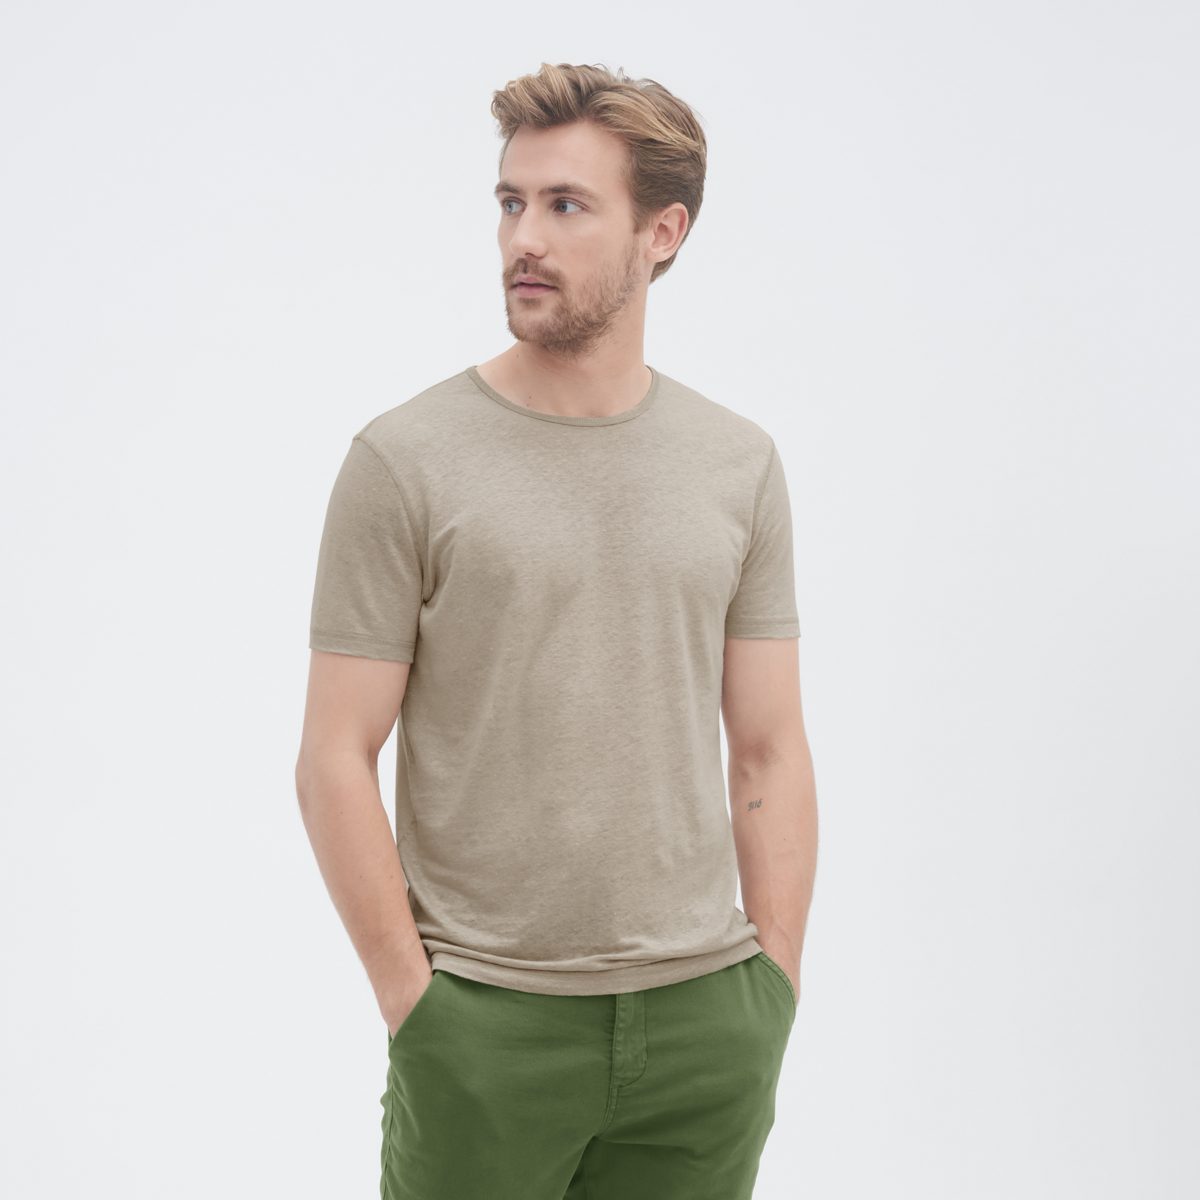 LIVING CRAFTS warme Tage Natural Leichter ANDY Leinen-Stoff für T-Shirt Linen